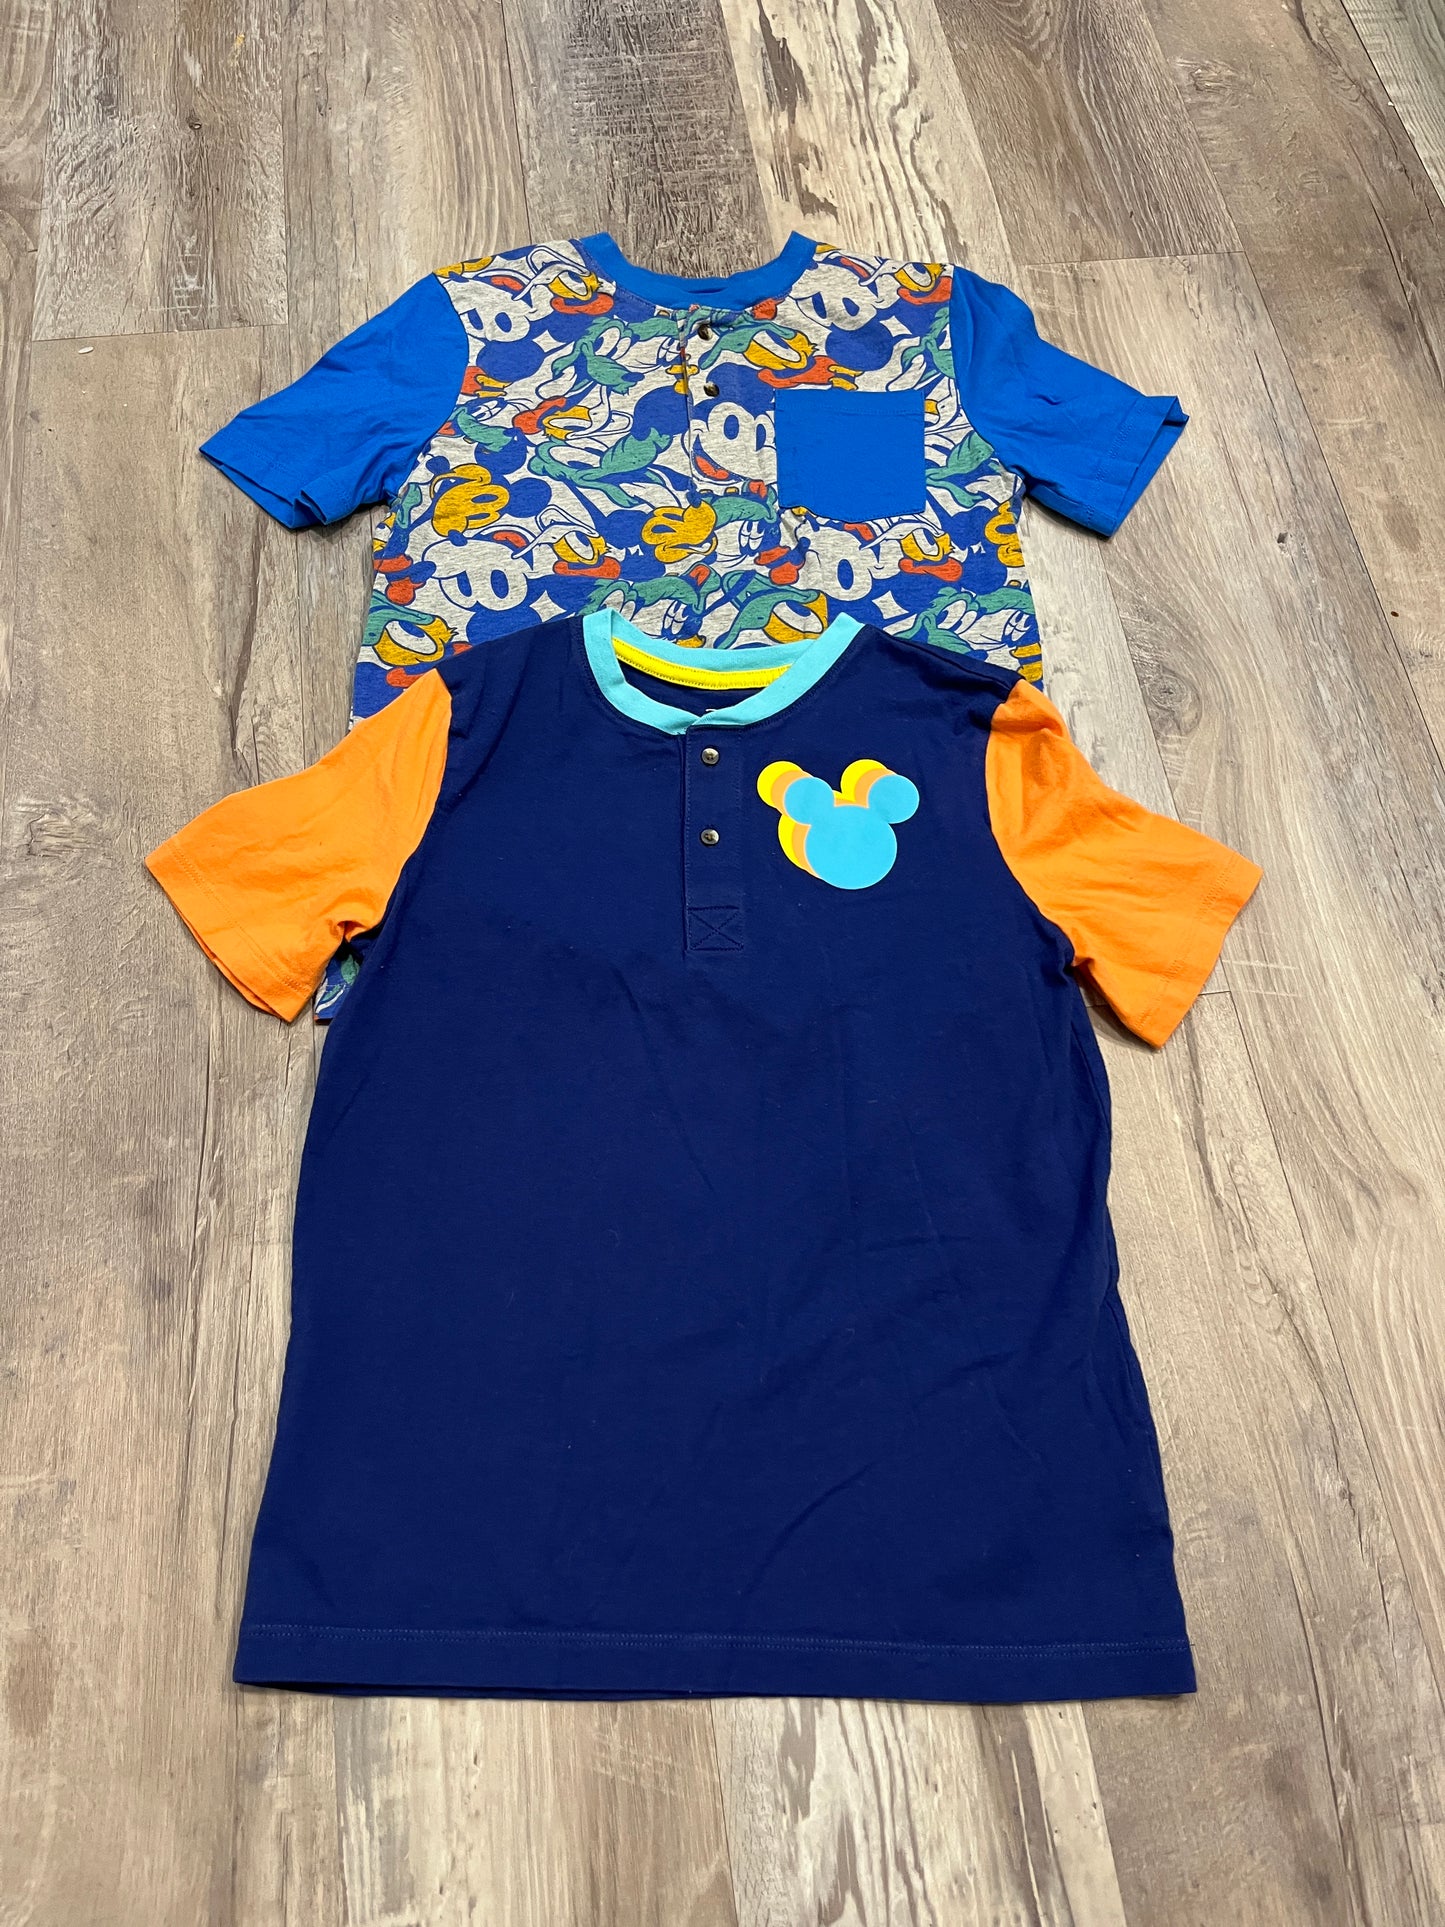 Boys Disney/Spotted Zebra Mickey Shirt Set Size M (8)